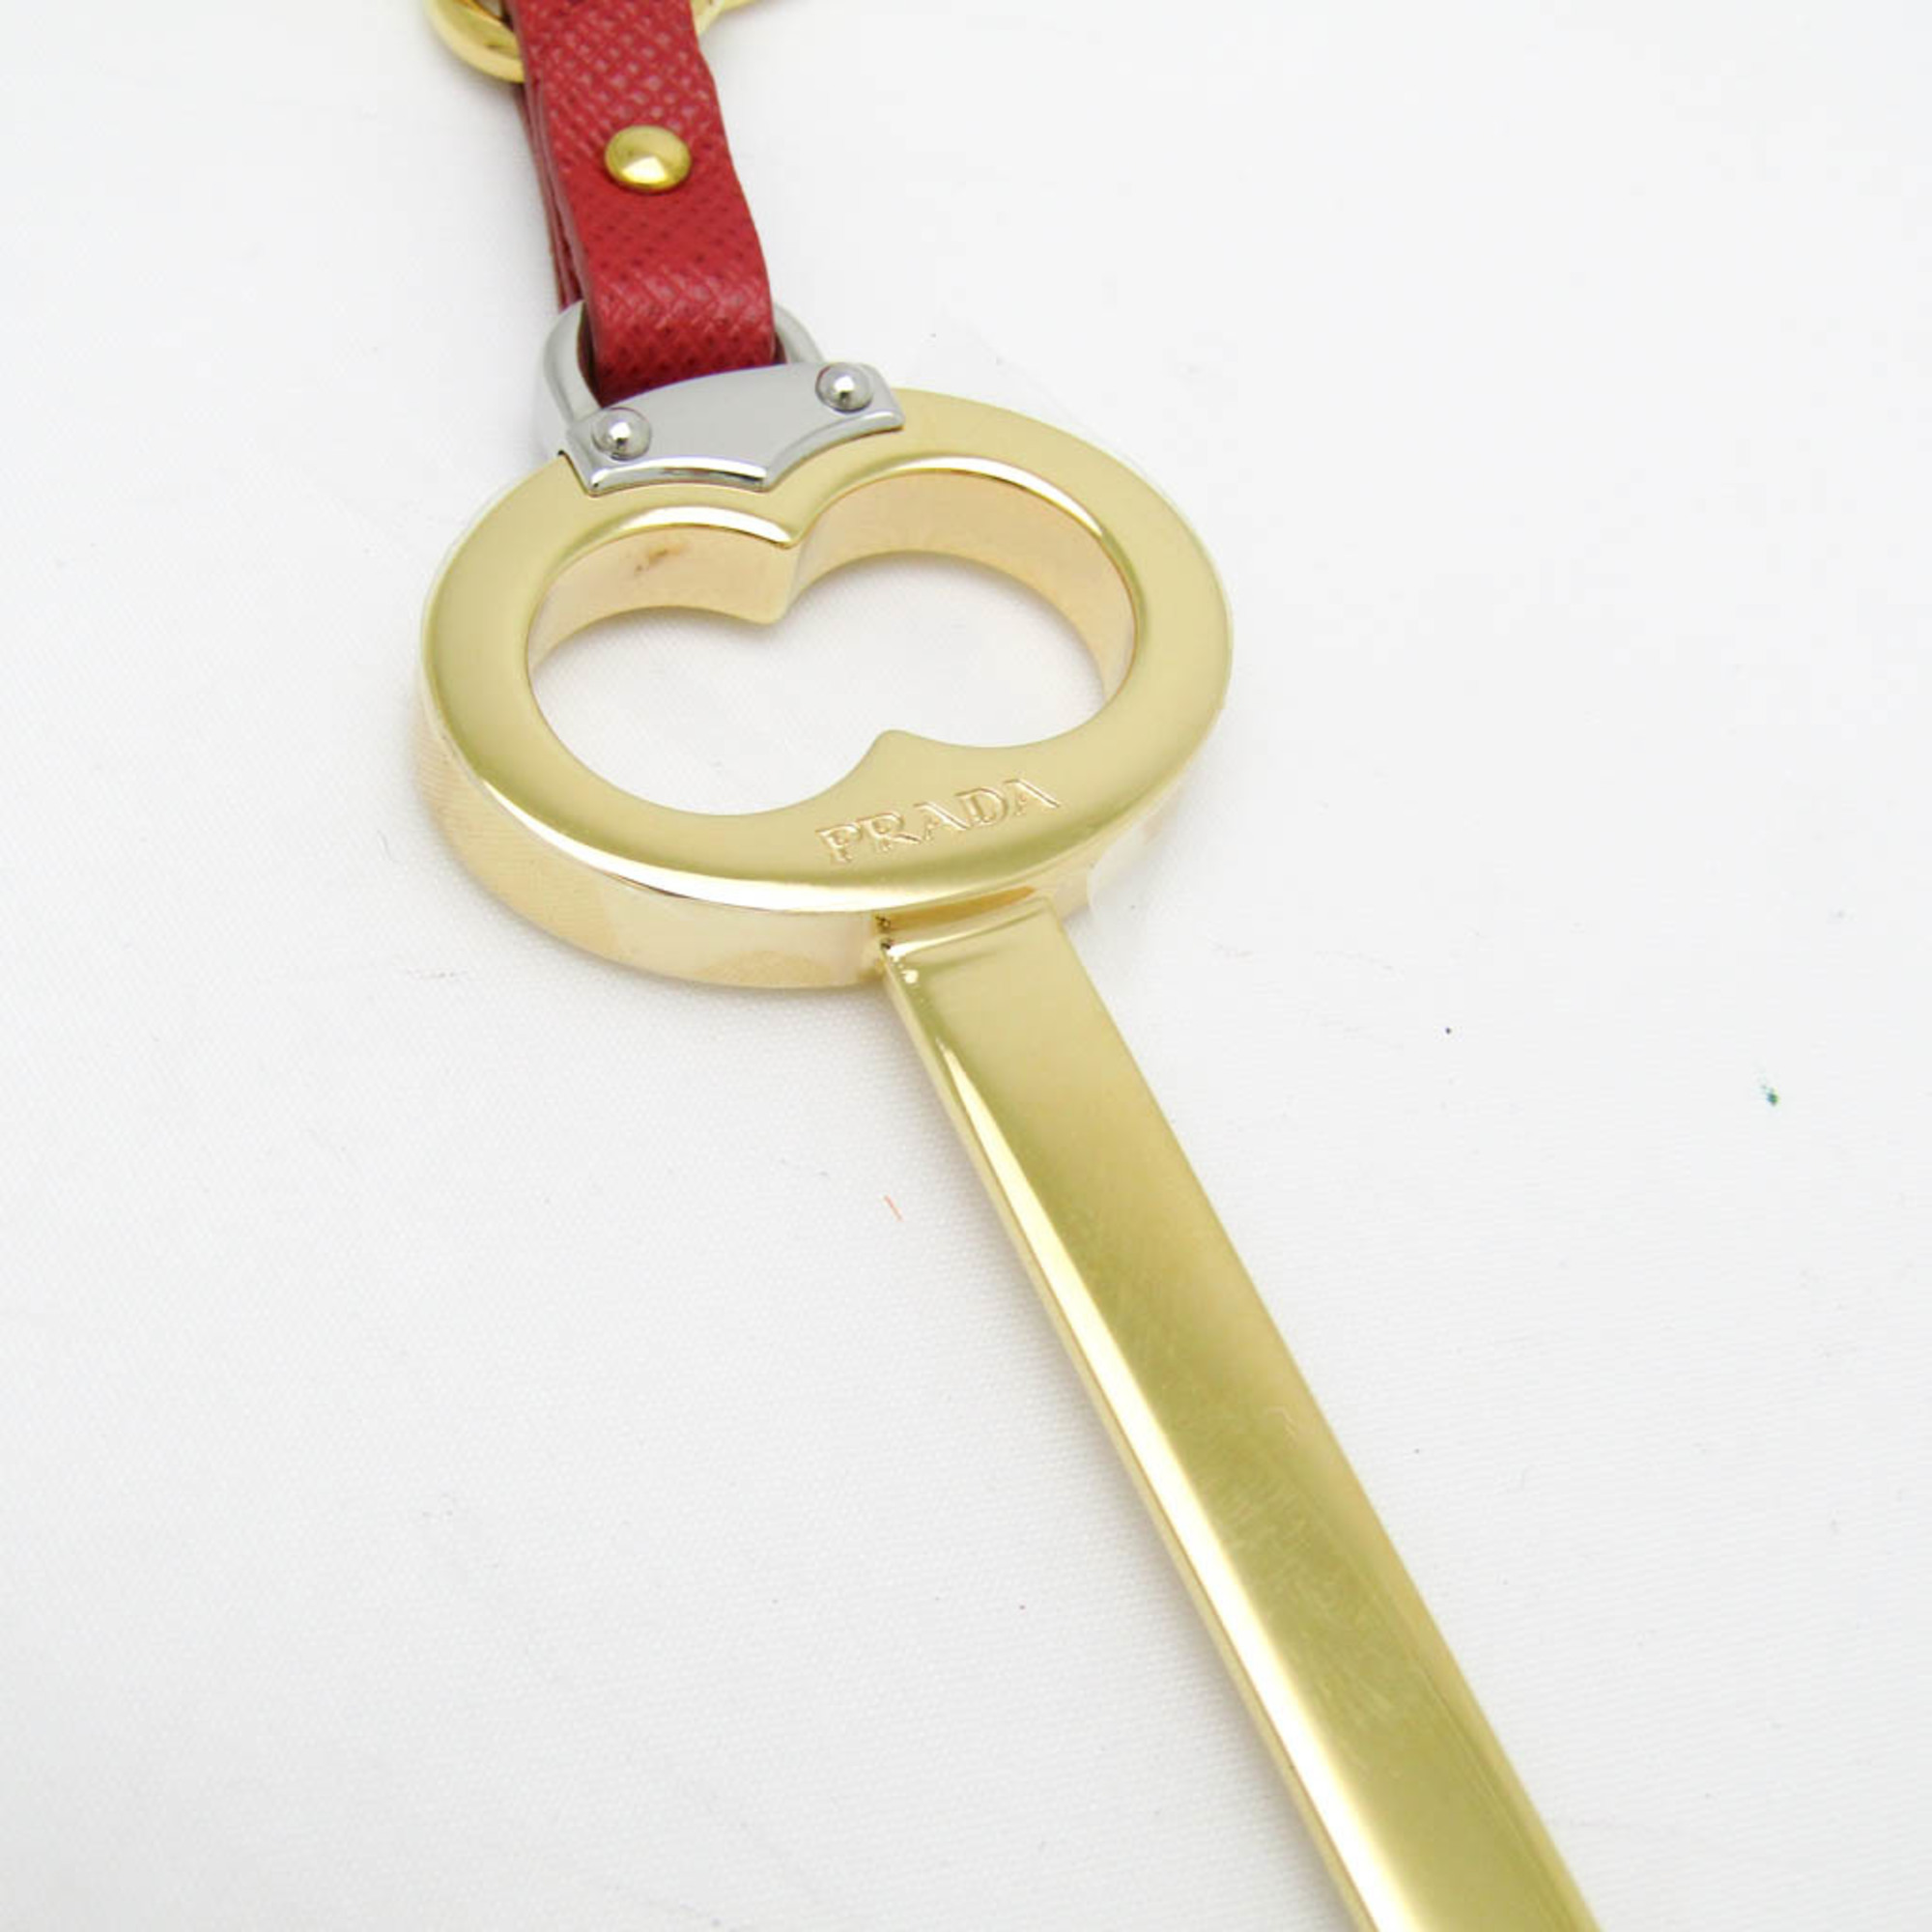 Prada Key 1TL282 Keyring (Gold,Red Color,Silver)